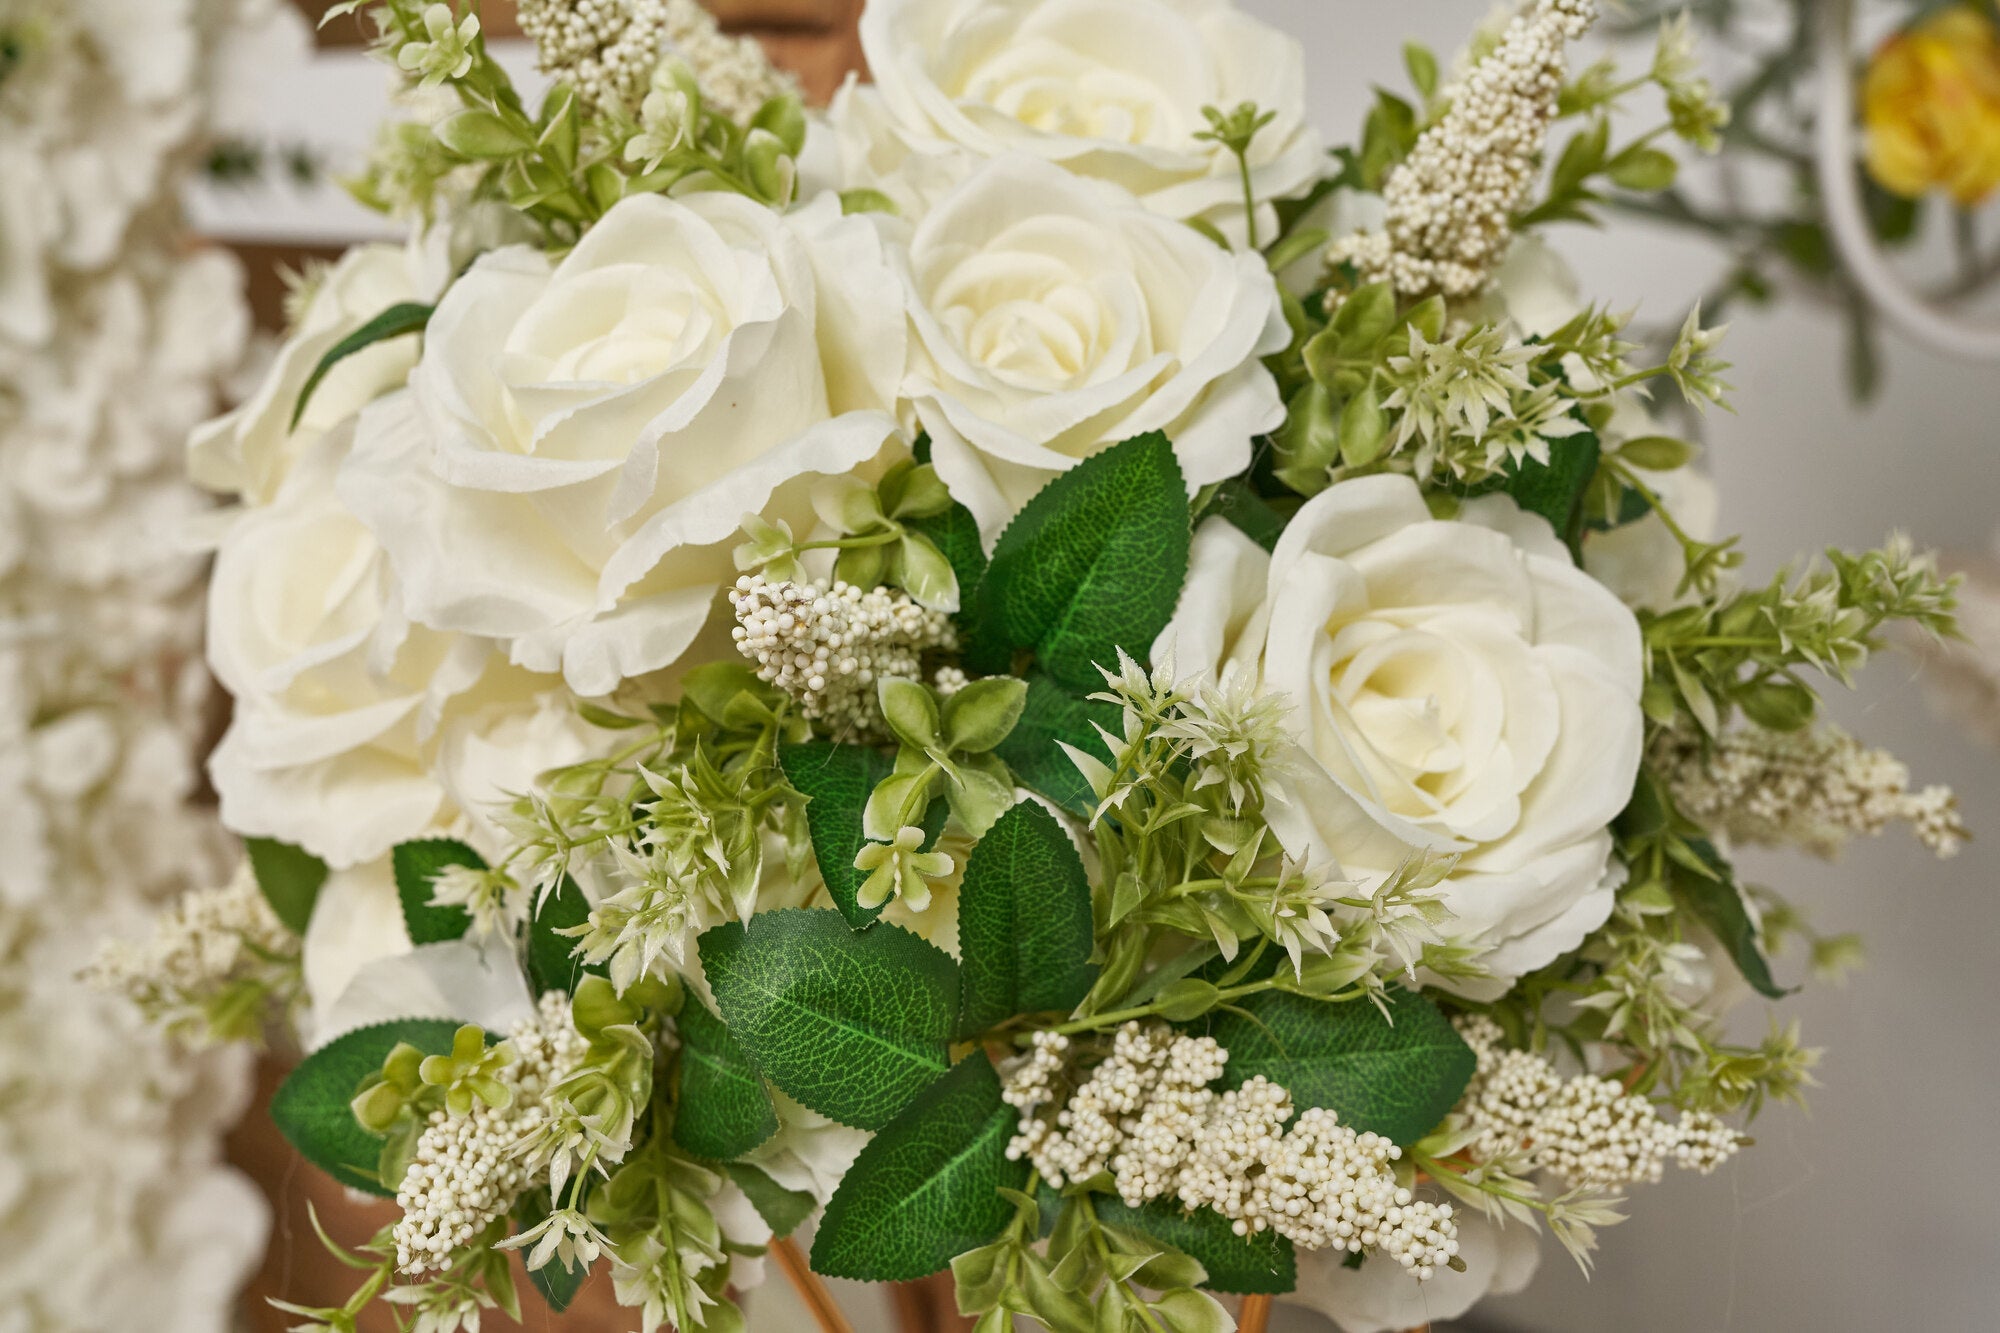 Flower Ball Sage & White Wedding Proposal Party Centerpieces Decor